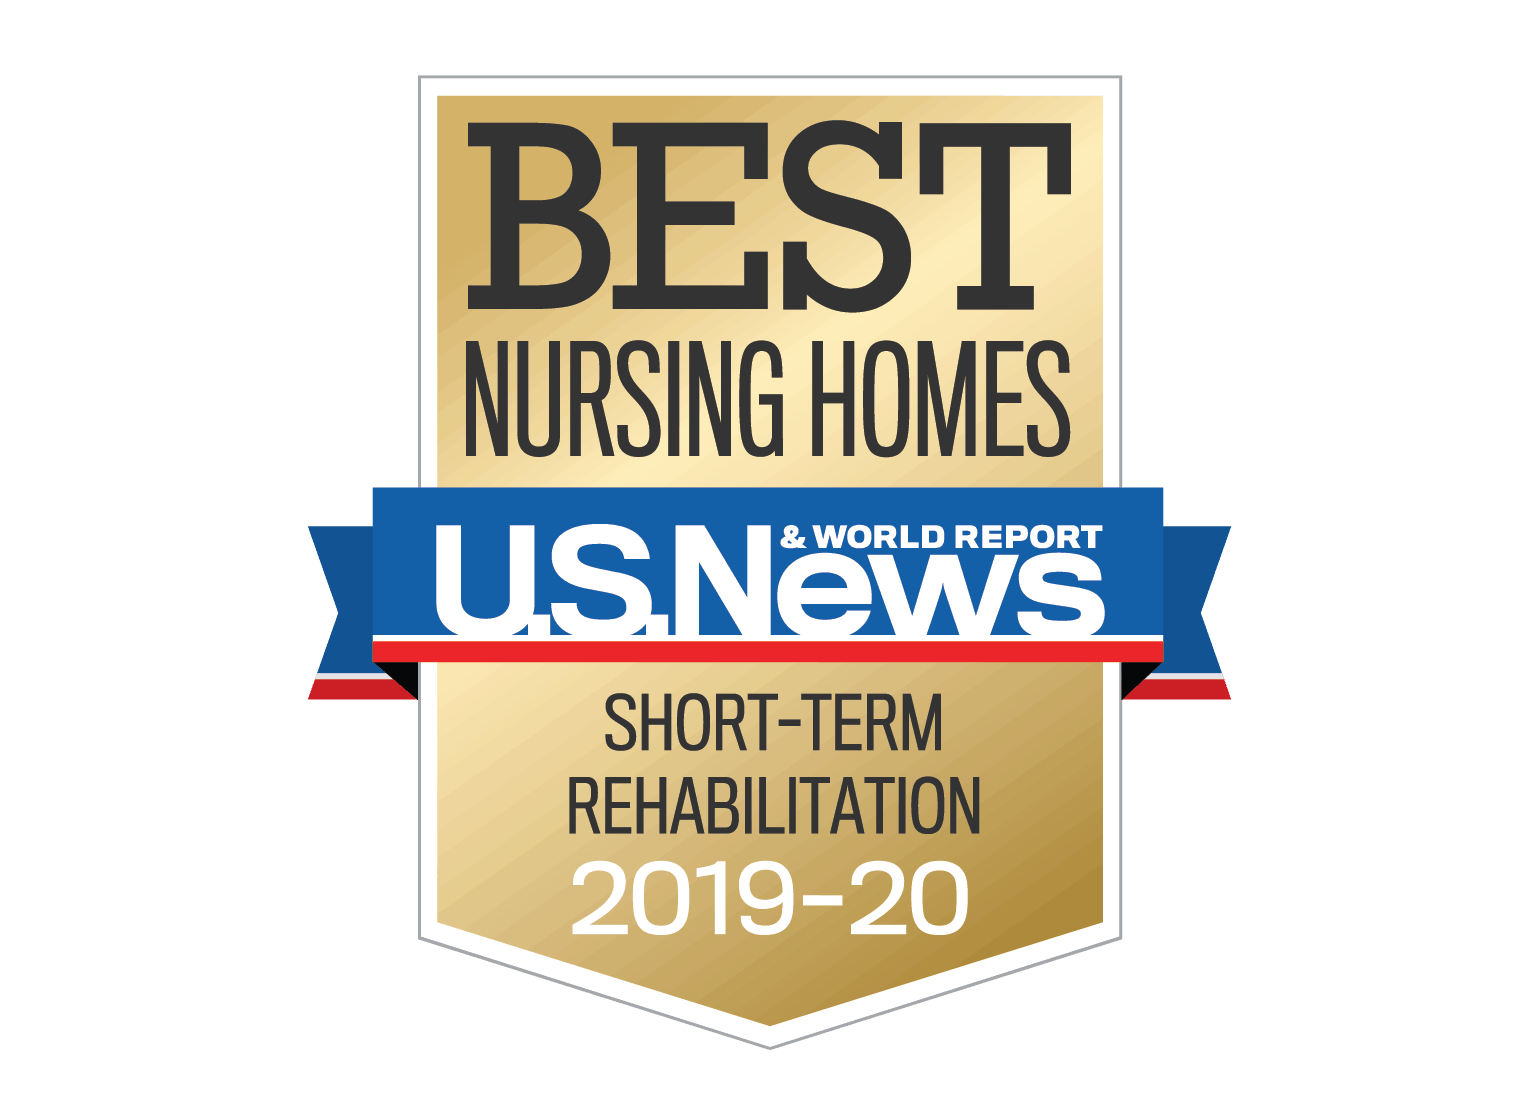 best nursing homes logo